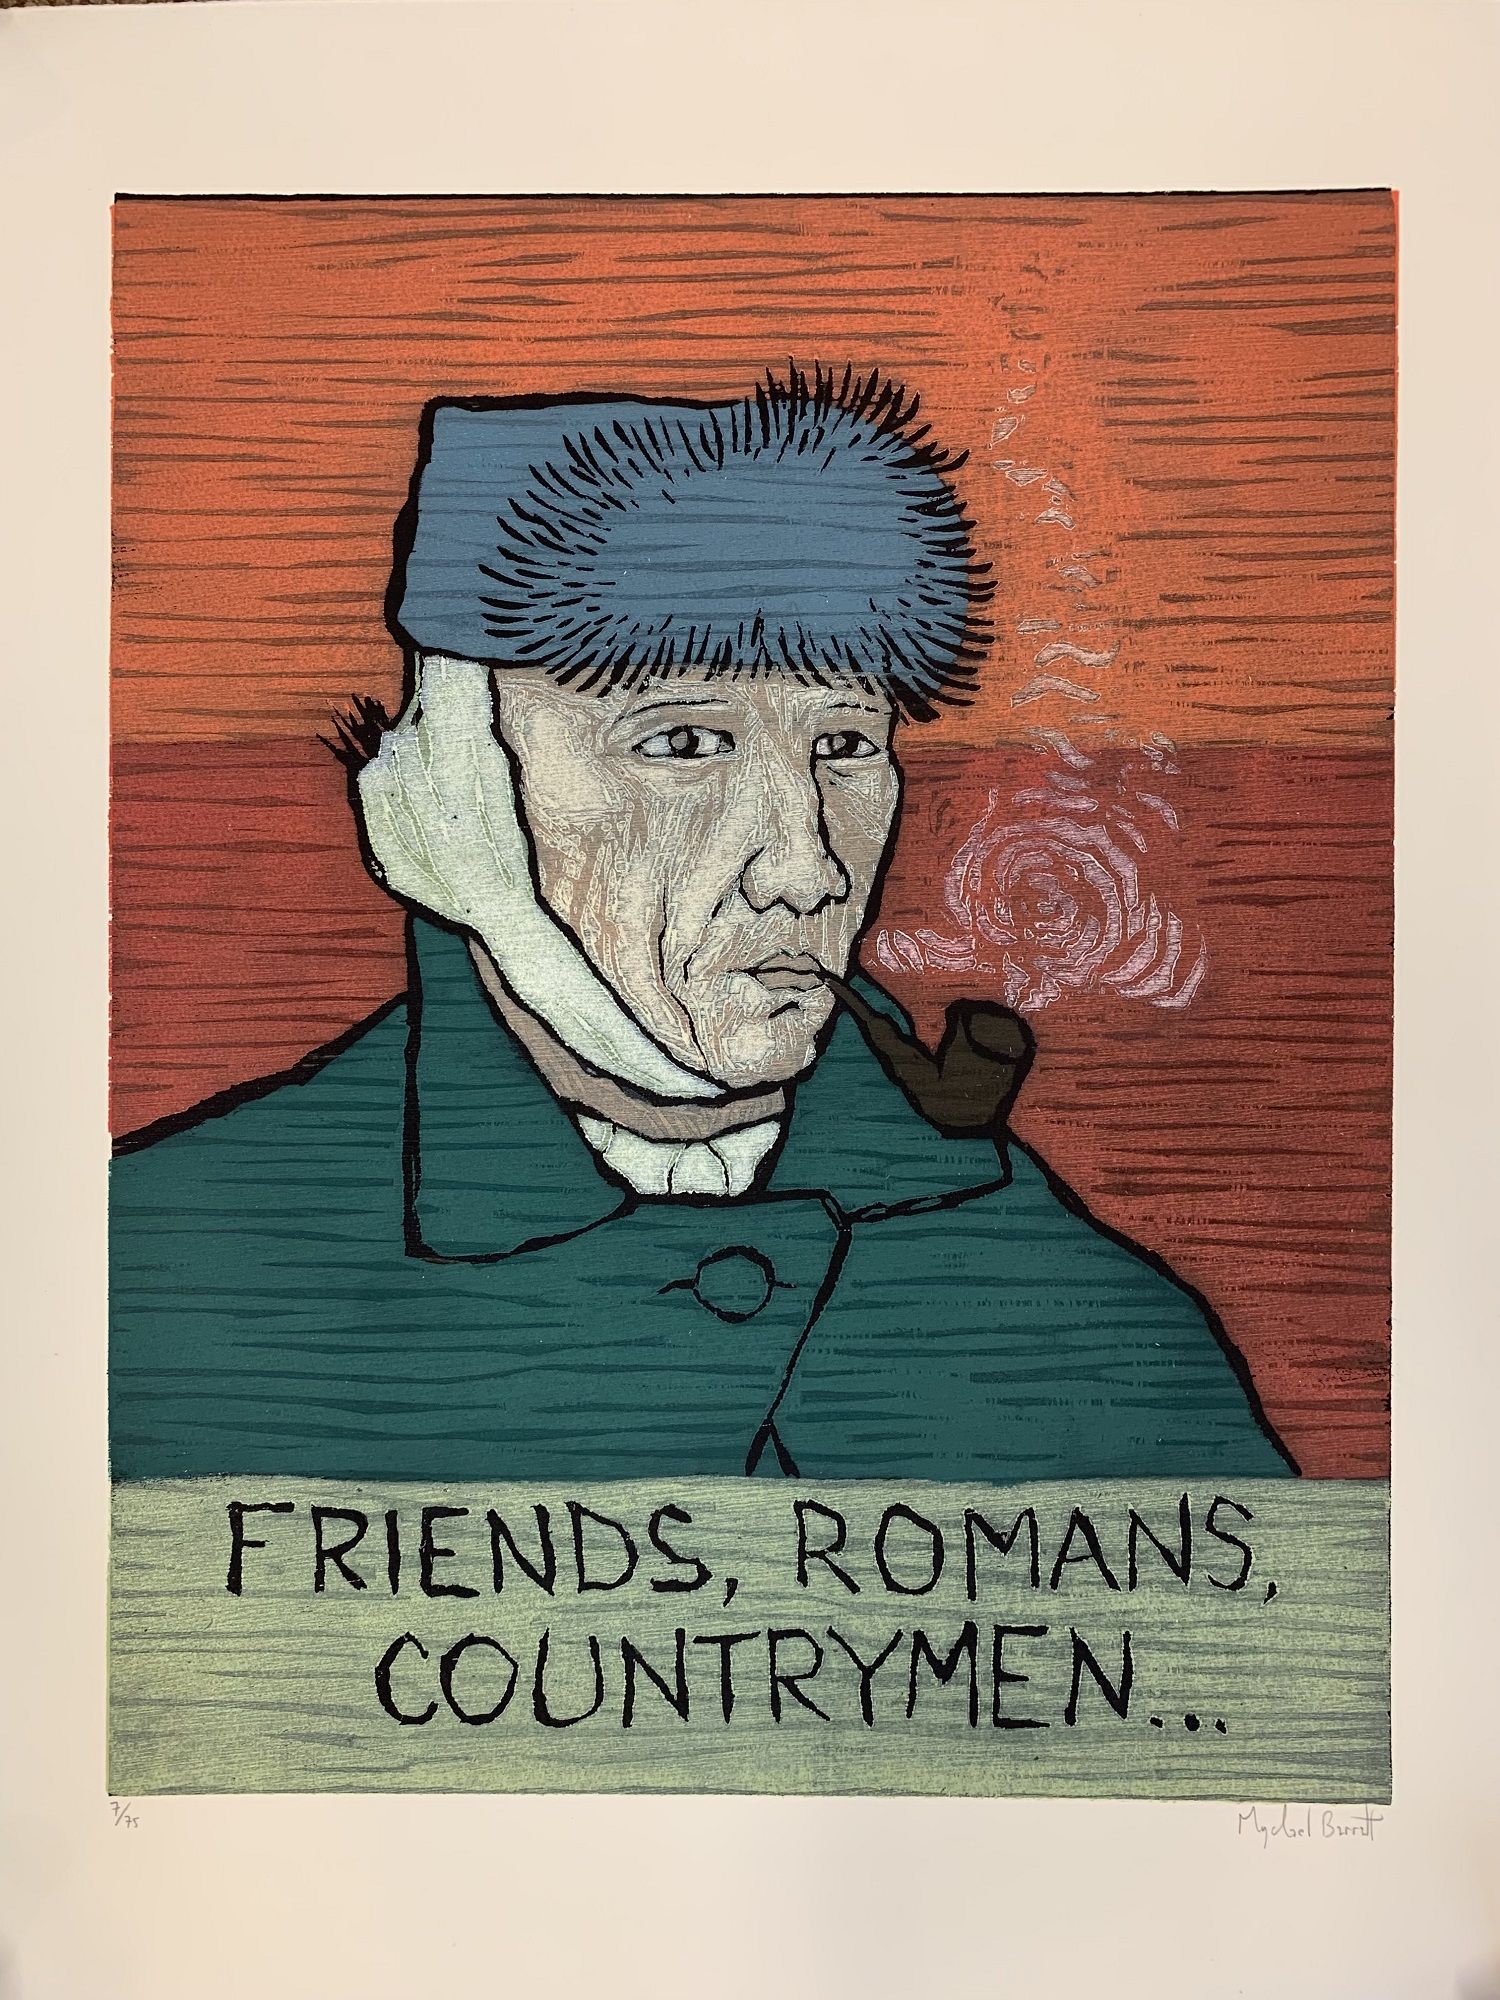 Friends, Romans, Countrymen by Mychael Barratt - Secondary Image